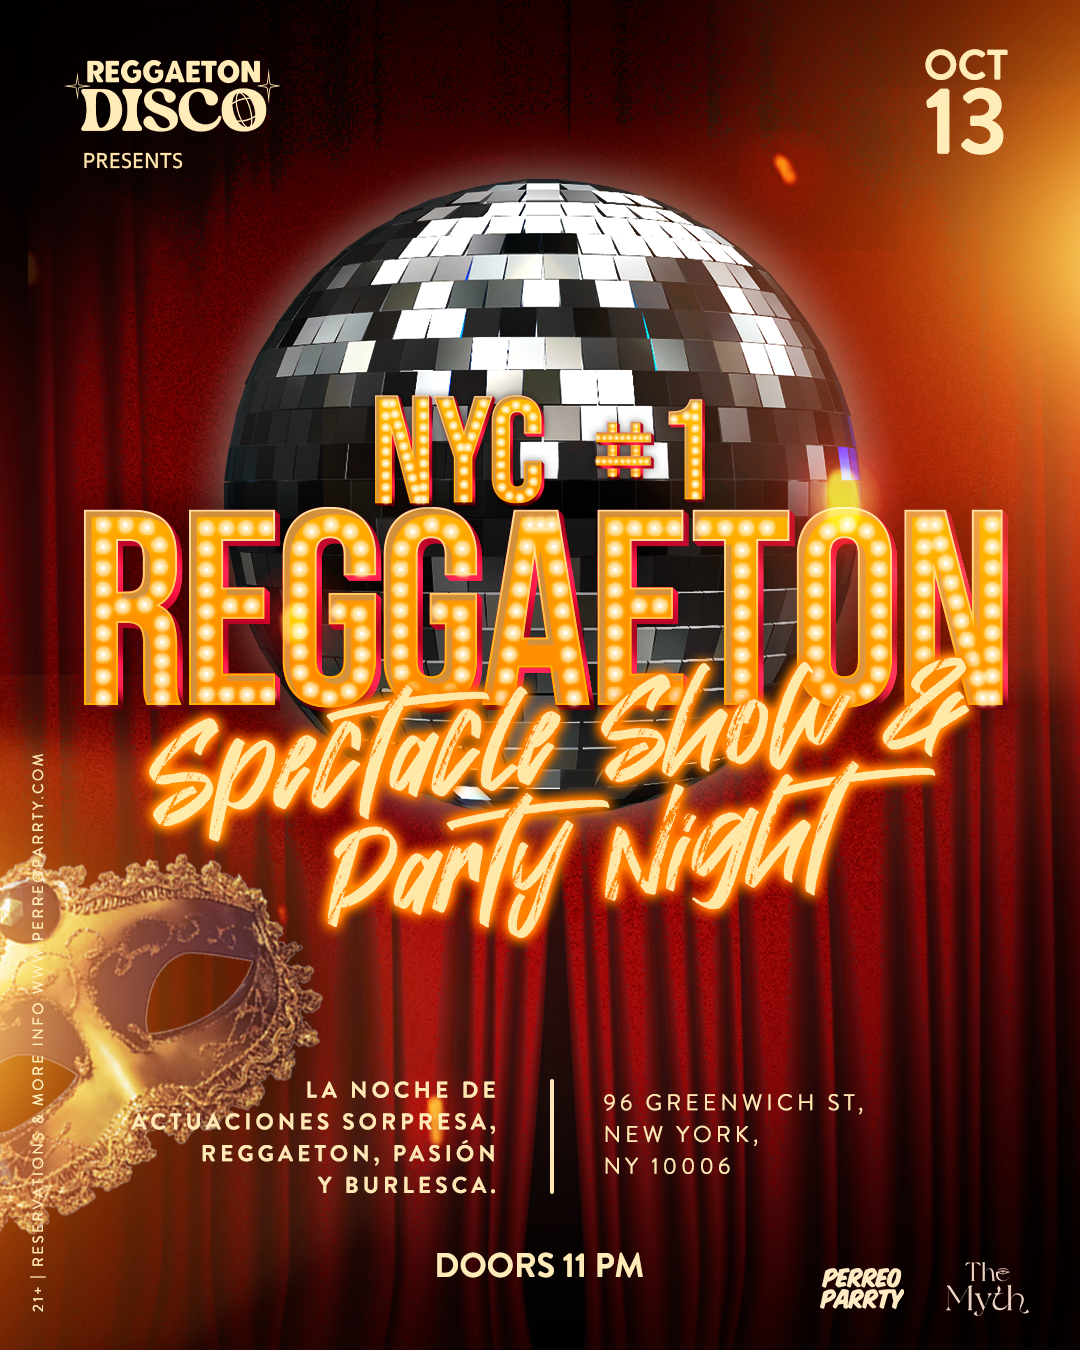 Reggaeton Disco: REGGAETON SPECTACLE Variety Show & Party Night